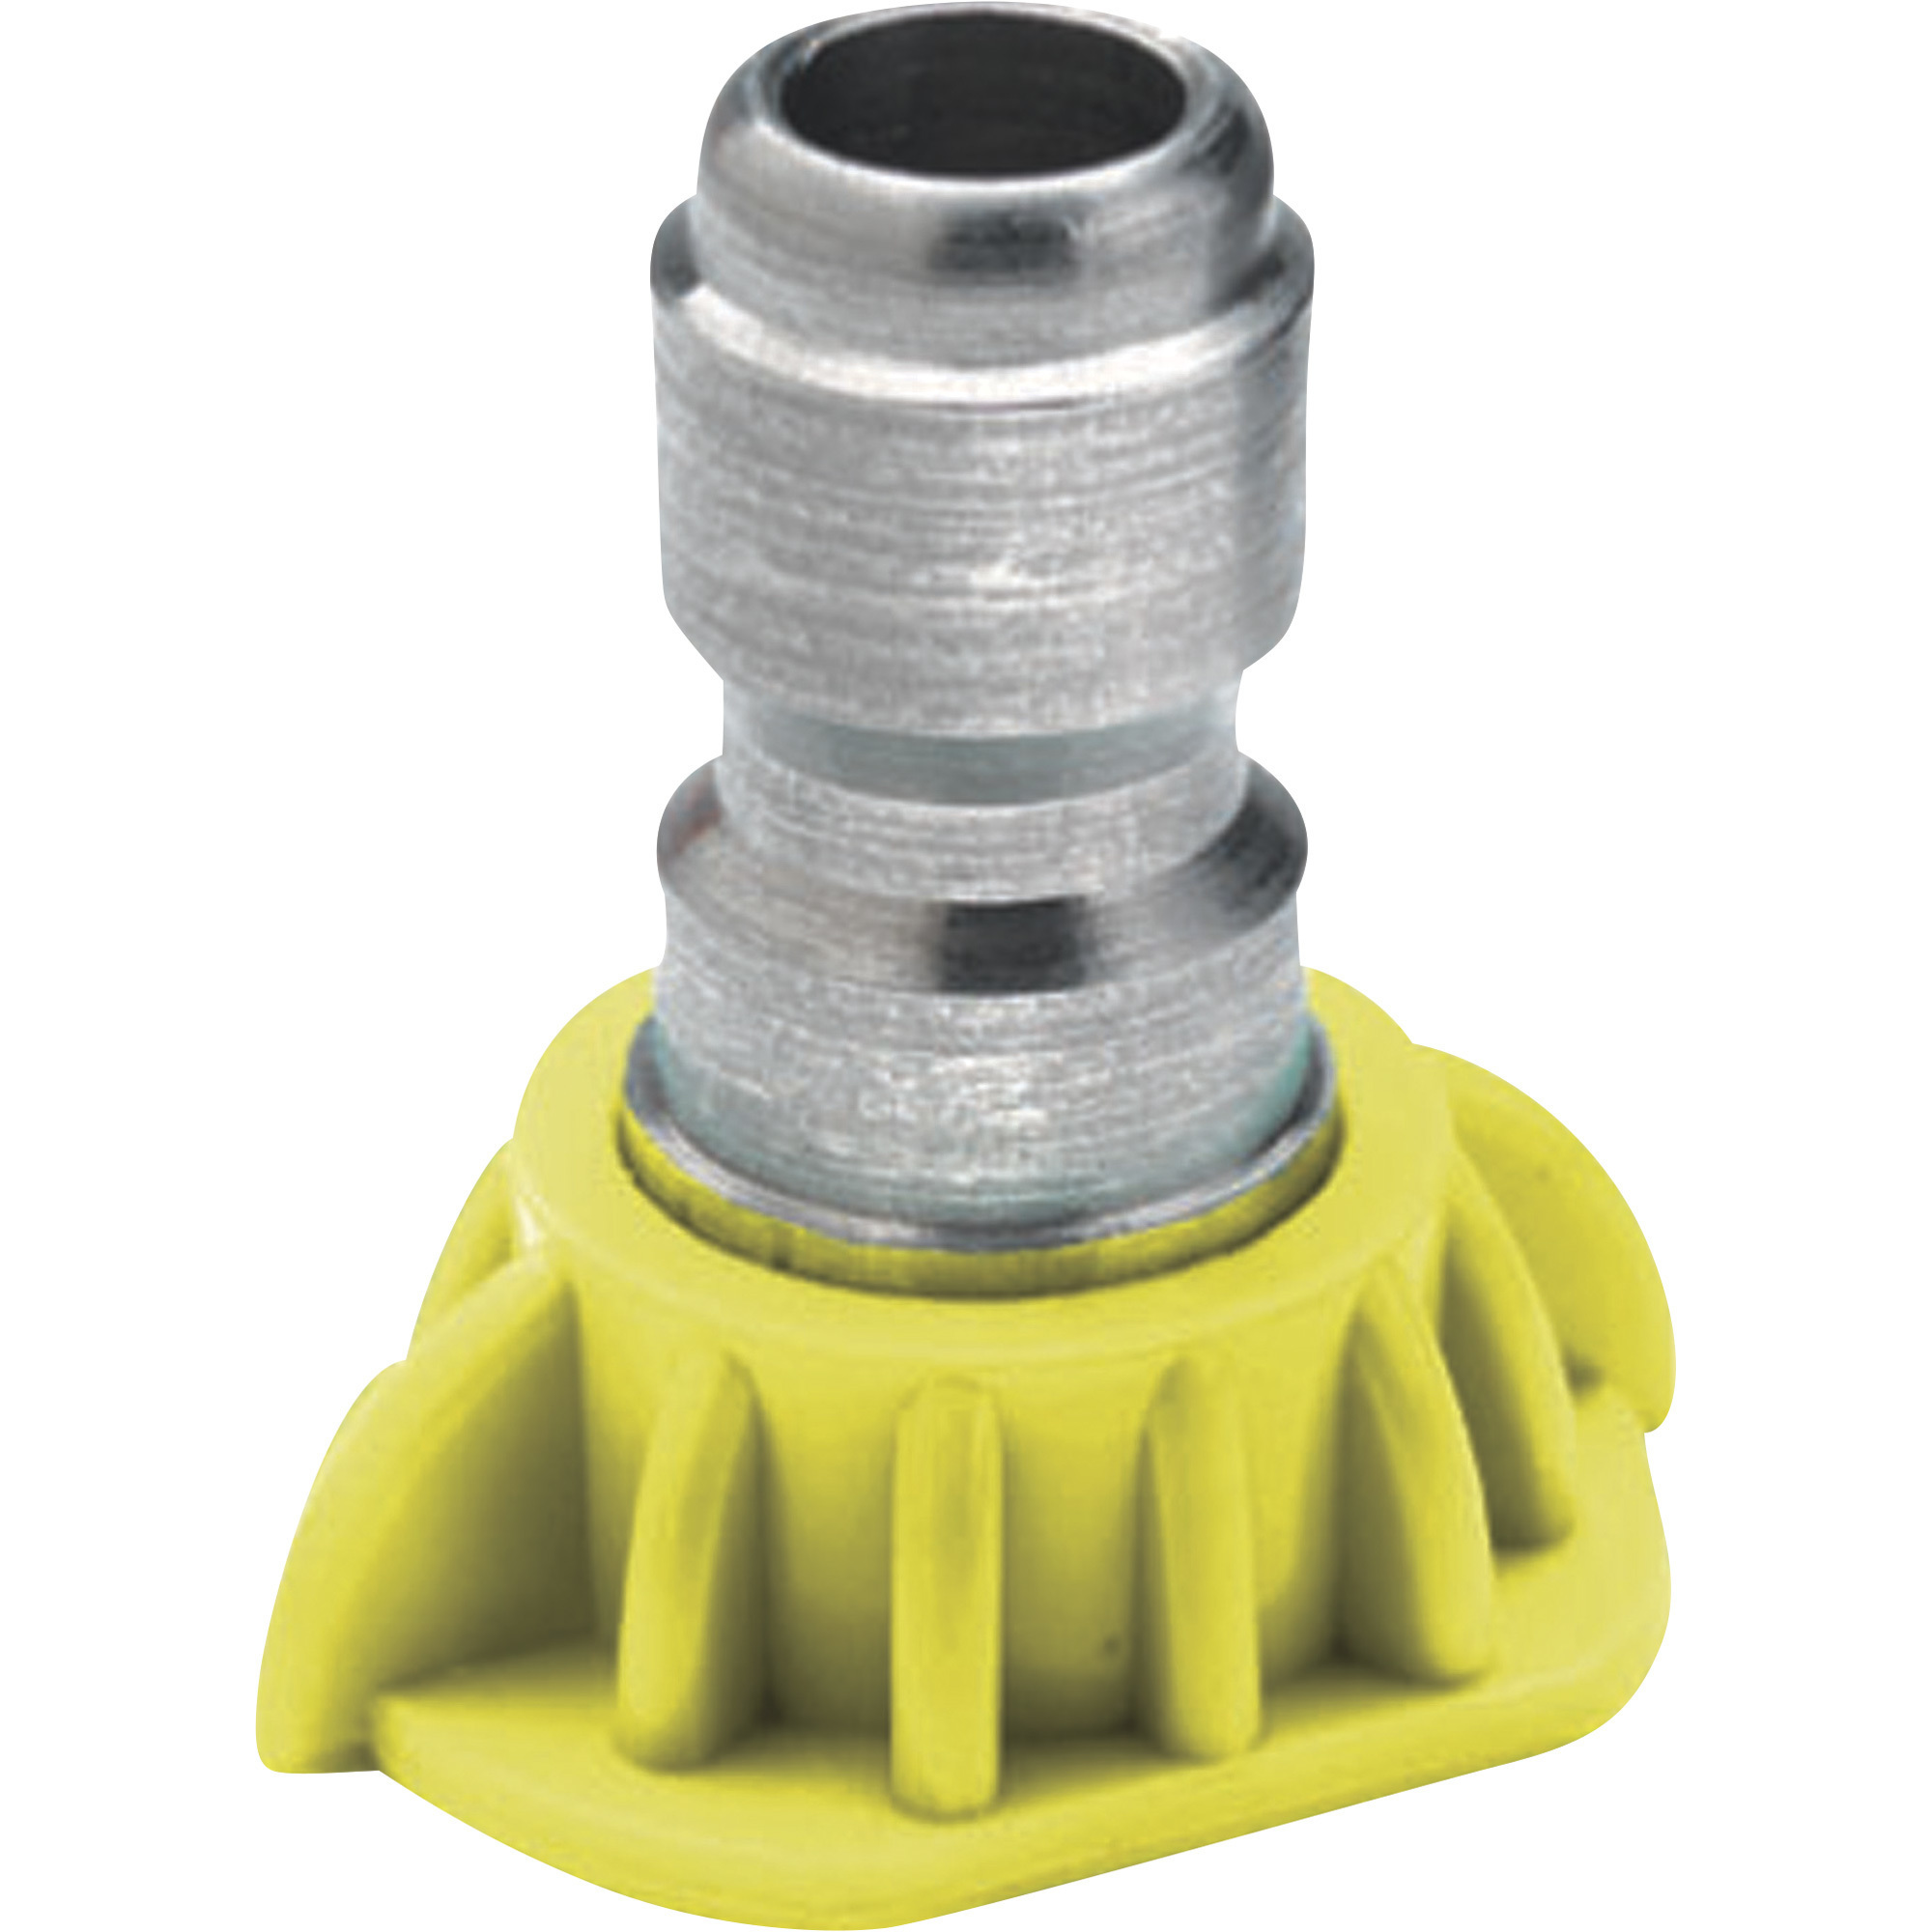 General Pump Pressure Washer Quick Couple Spray Nozzle â 3.5 Size, 15 Degree Spray, Model N15035QP